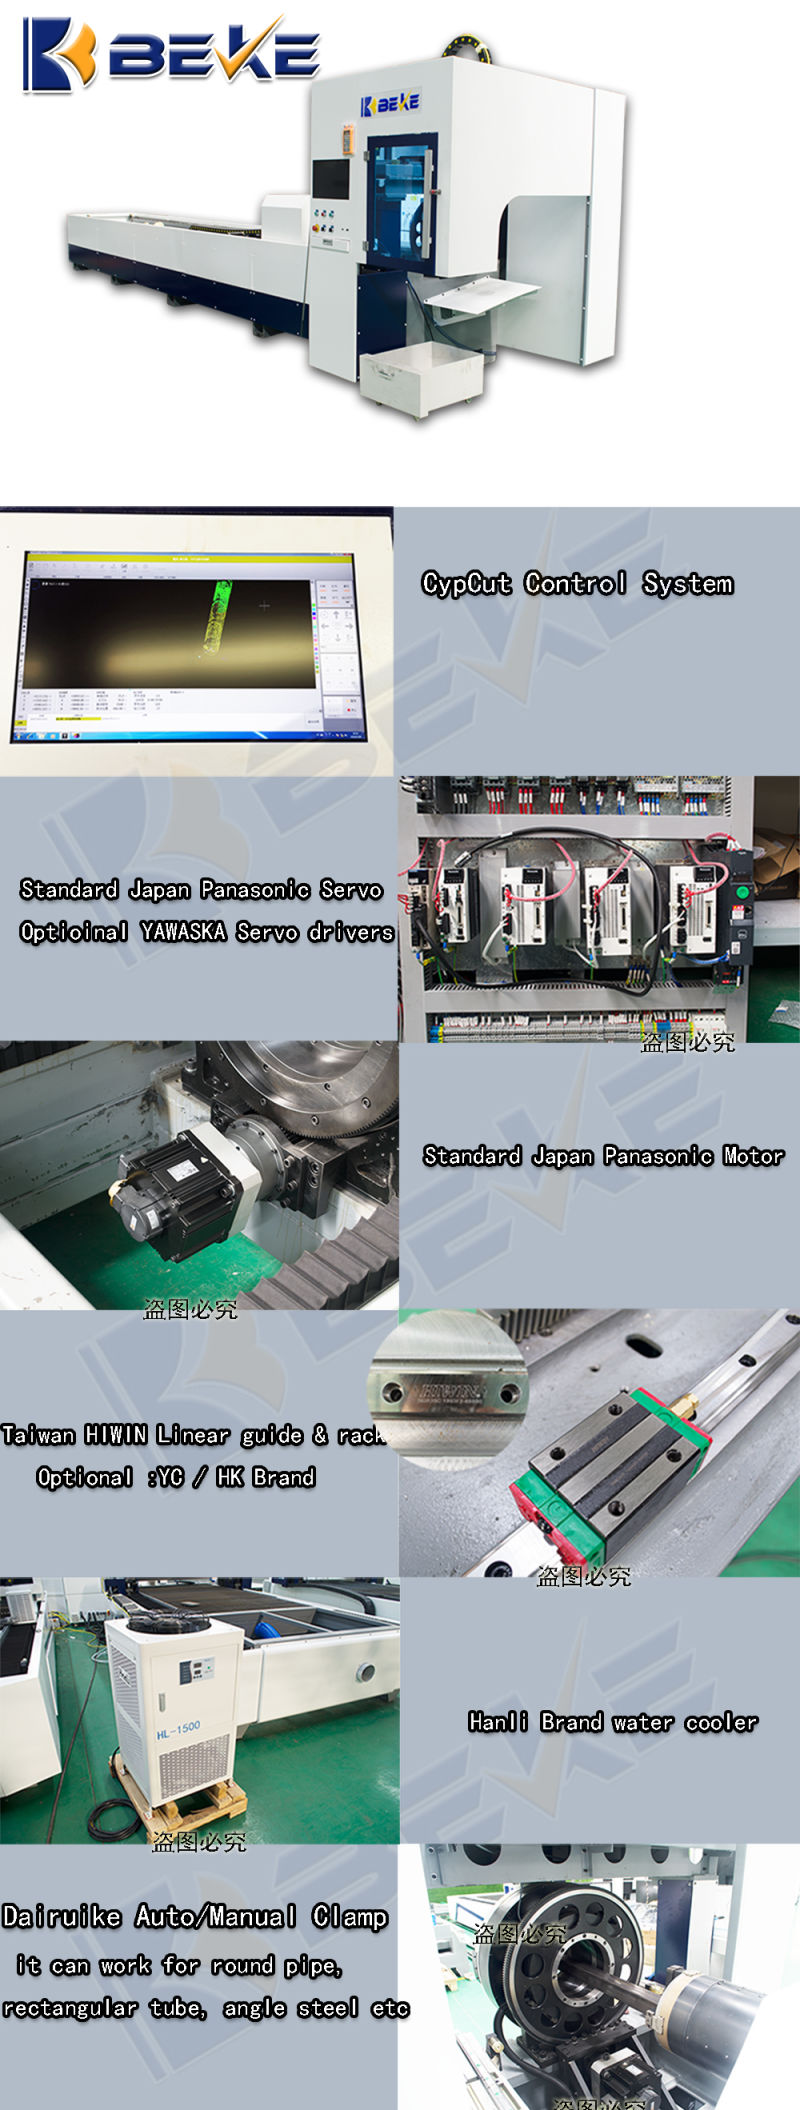 Bk 6012 Ss Sheet Tube CNC Fiber Laser Cutting Machine